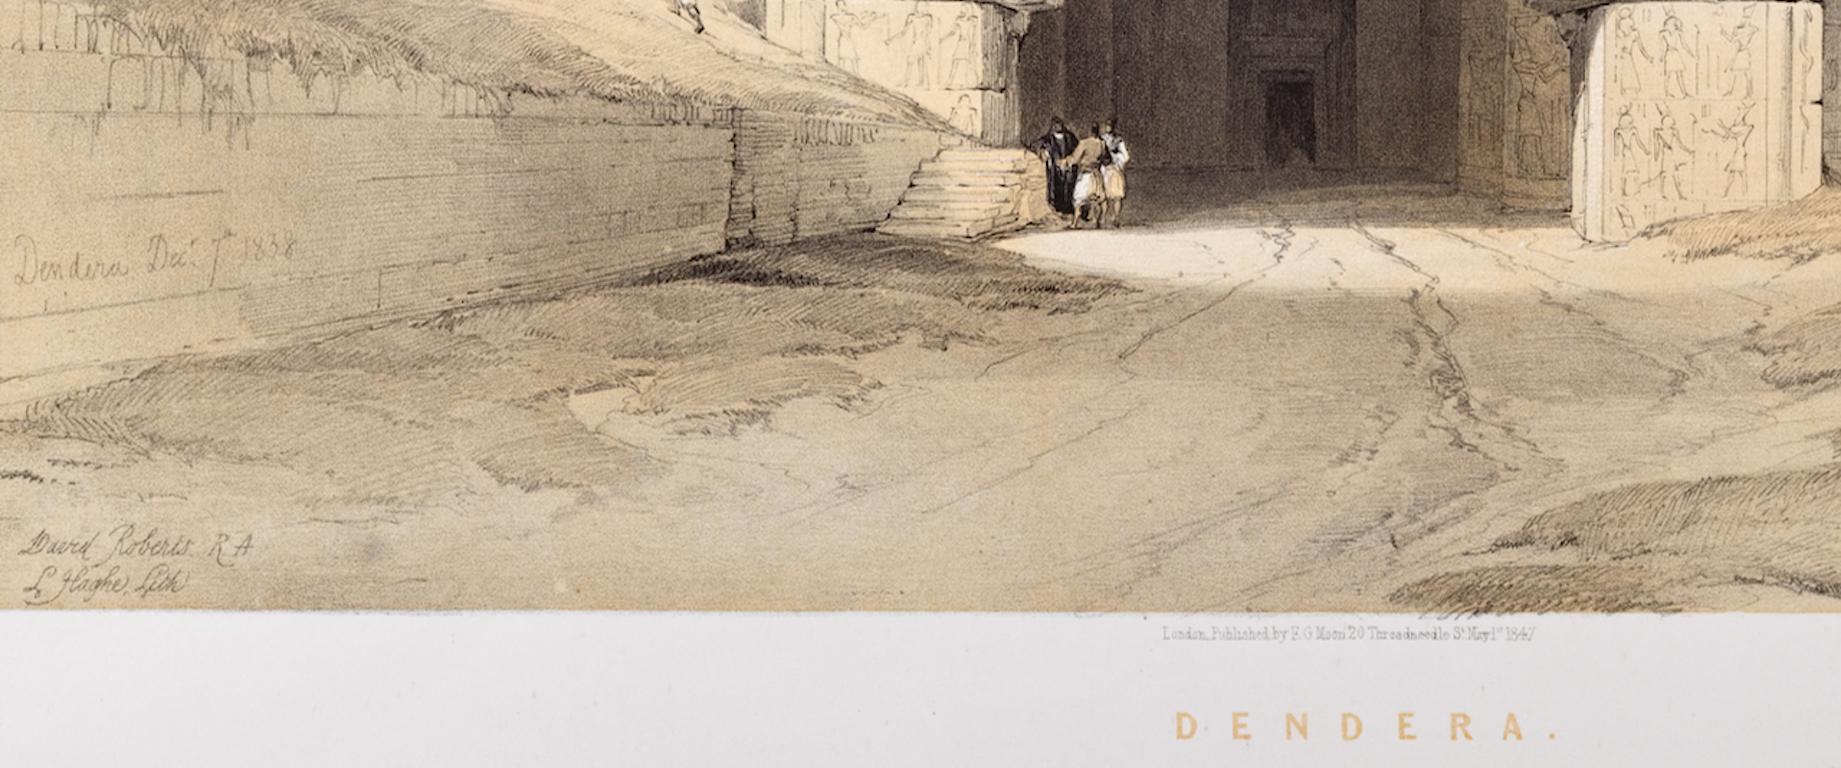 Dendera, Egypt, Dec 7th, 1838: David Roberts' 19th C. Duotone Lithograph For Sale 1